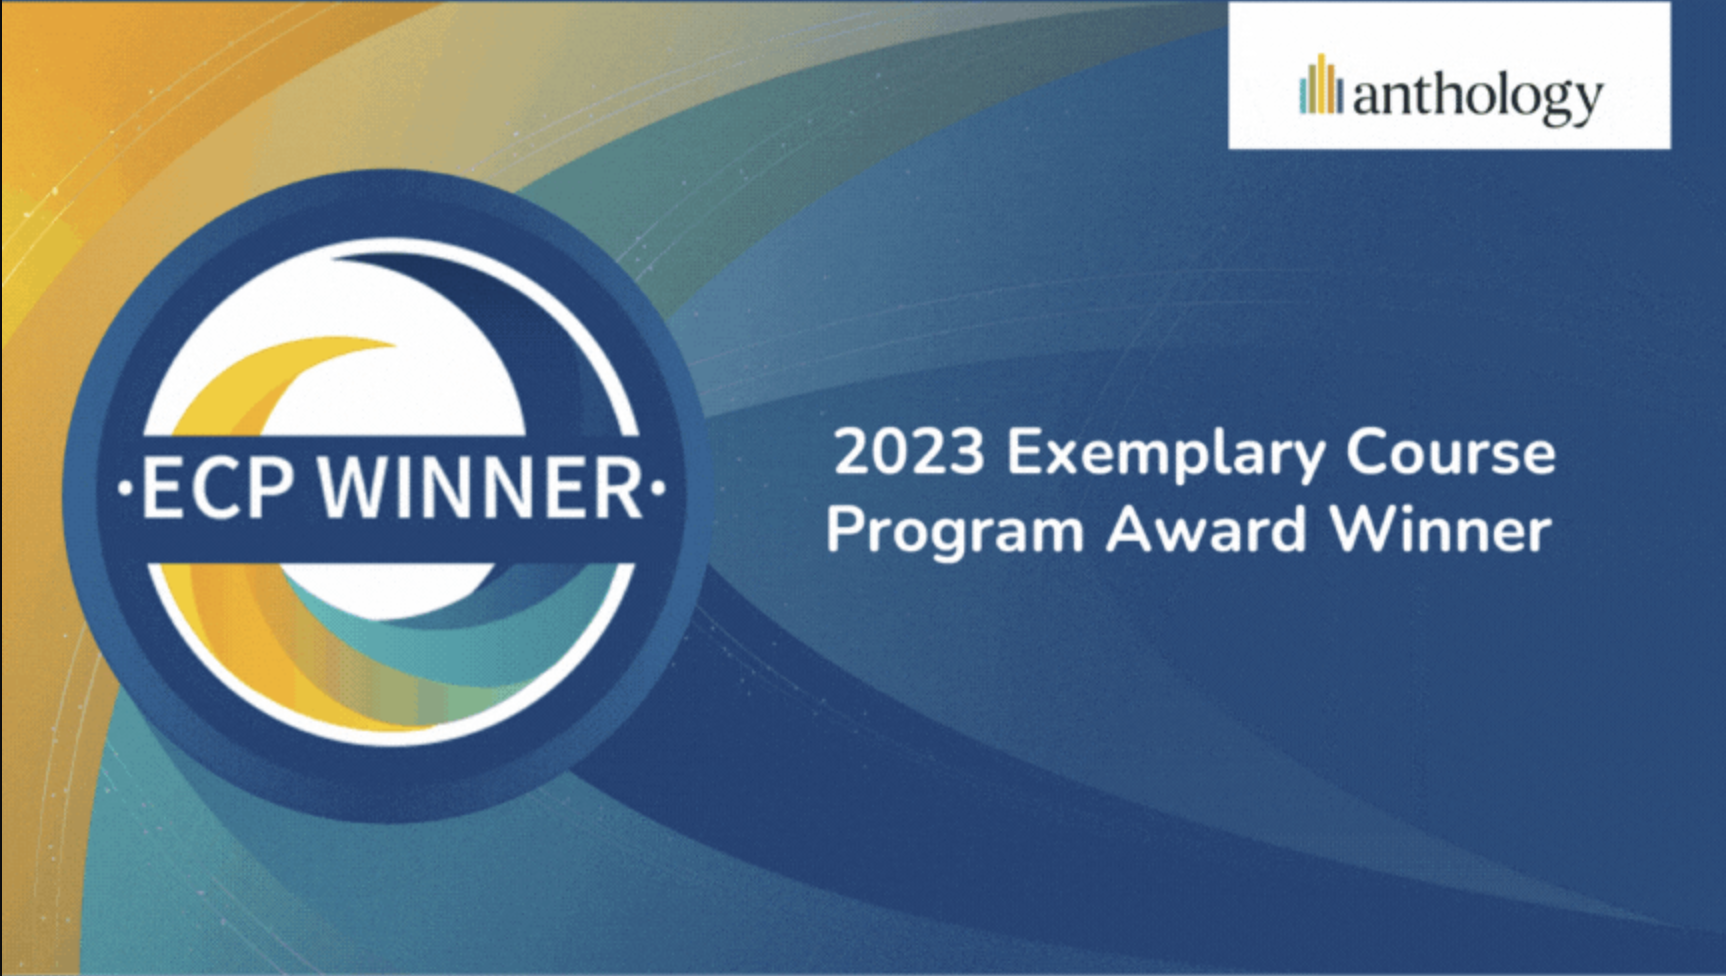 Exemplary Course award winner logo